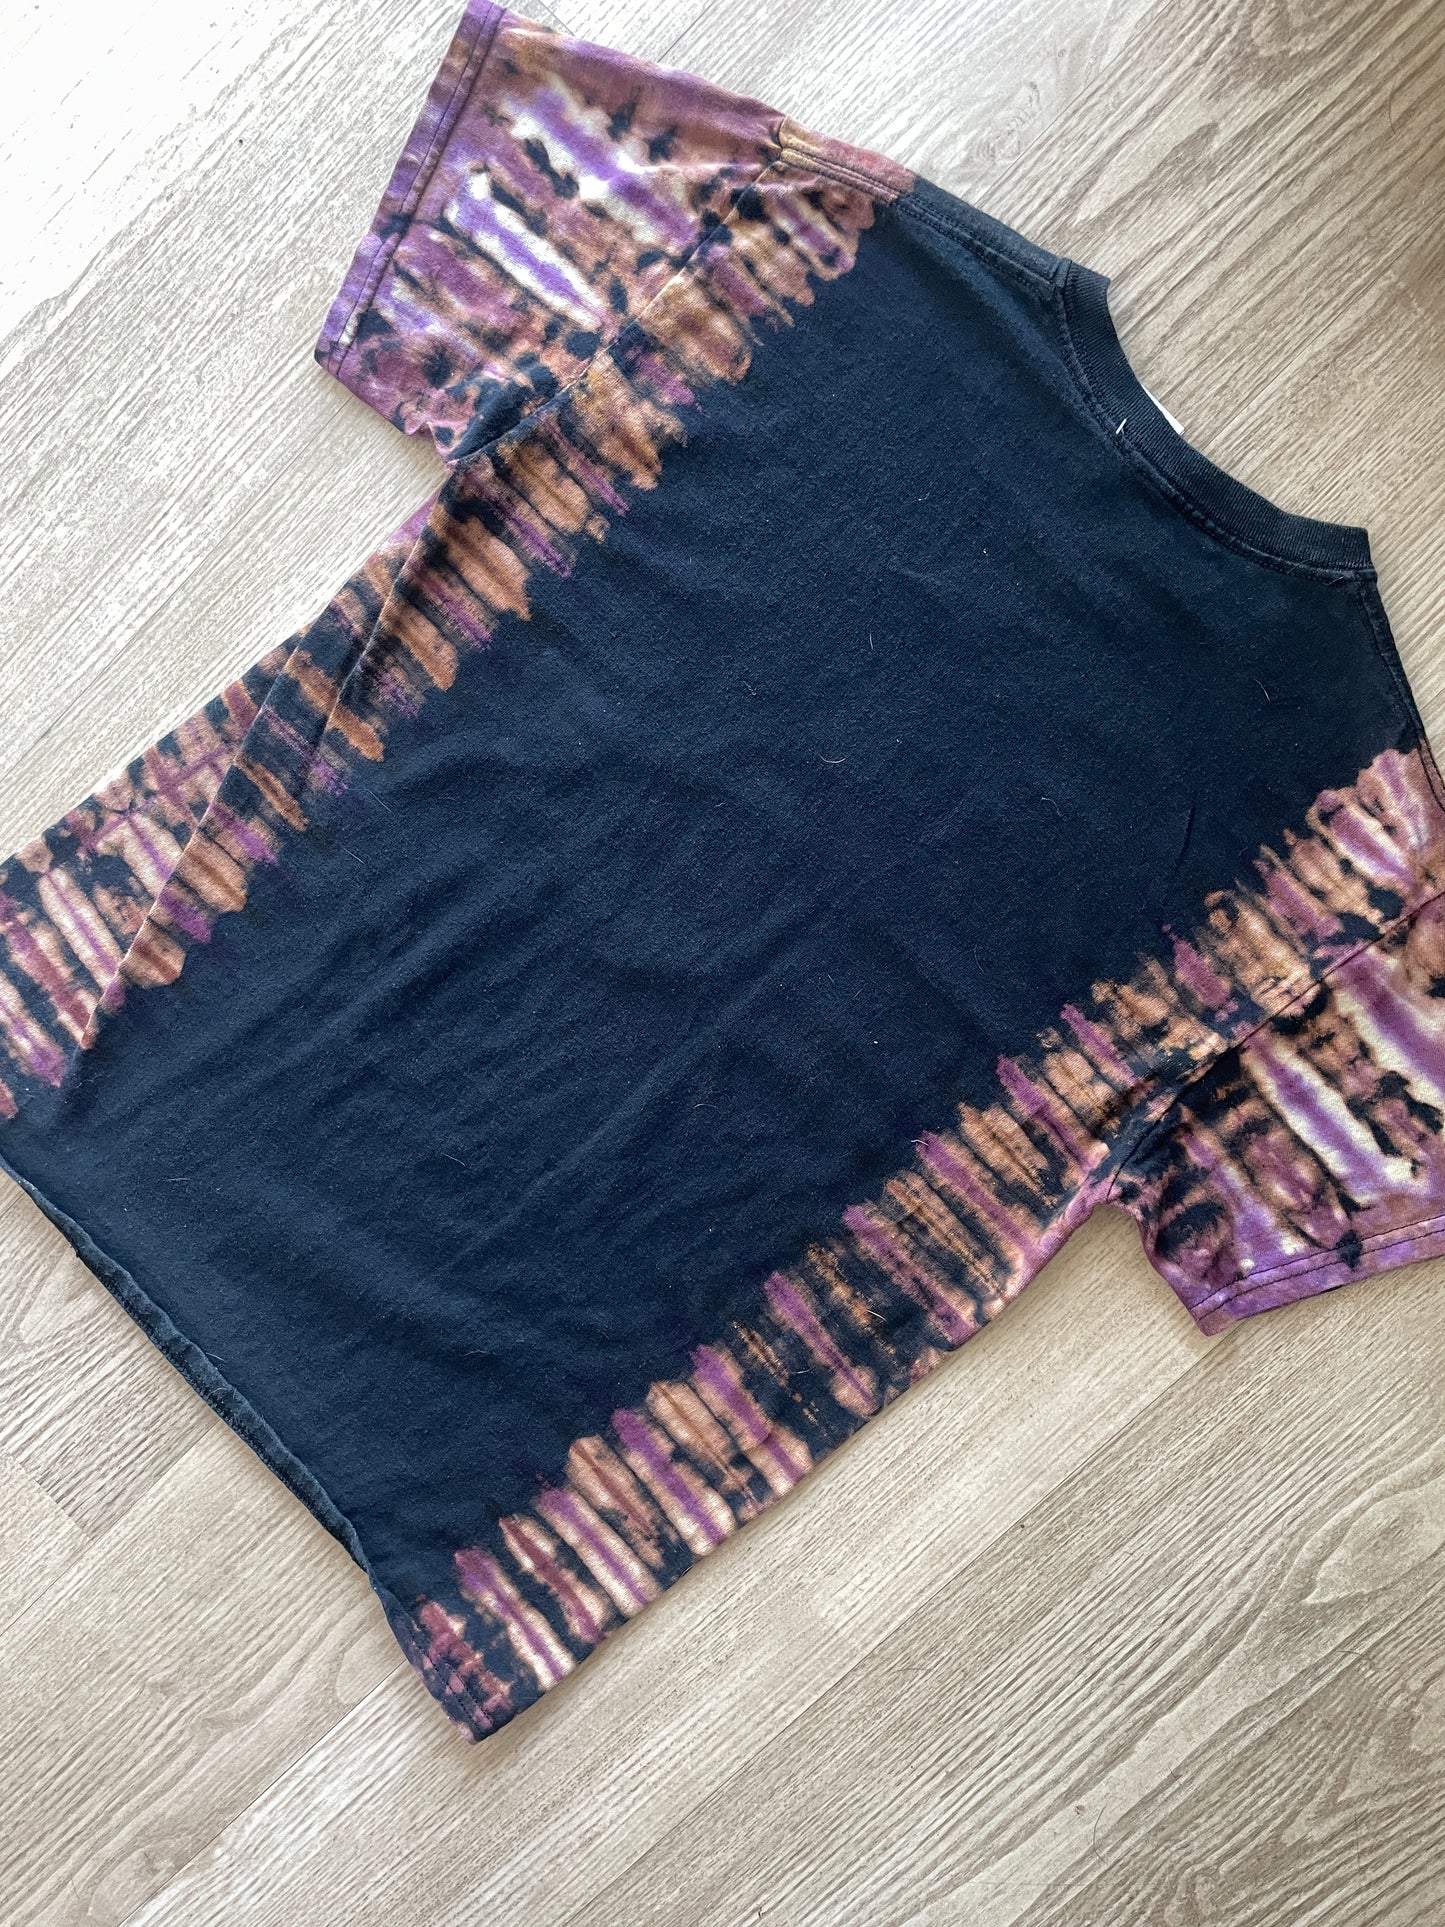 MEDIUM Men’s Juice World Handmade Reverse Tie Dye Short Sleeve T-Shirt | One-Of-a-Kind Upcycled Black and Purple Pleated Acid Dye Top